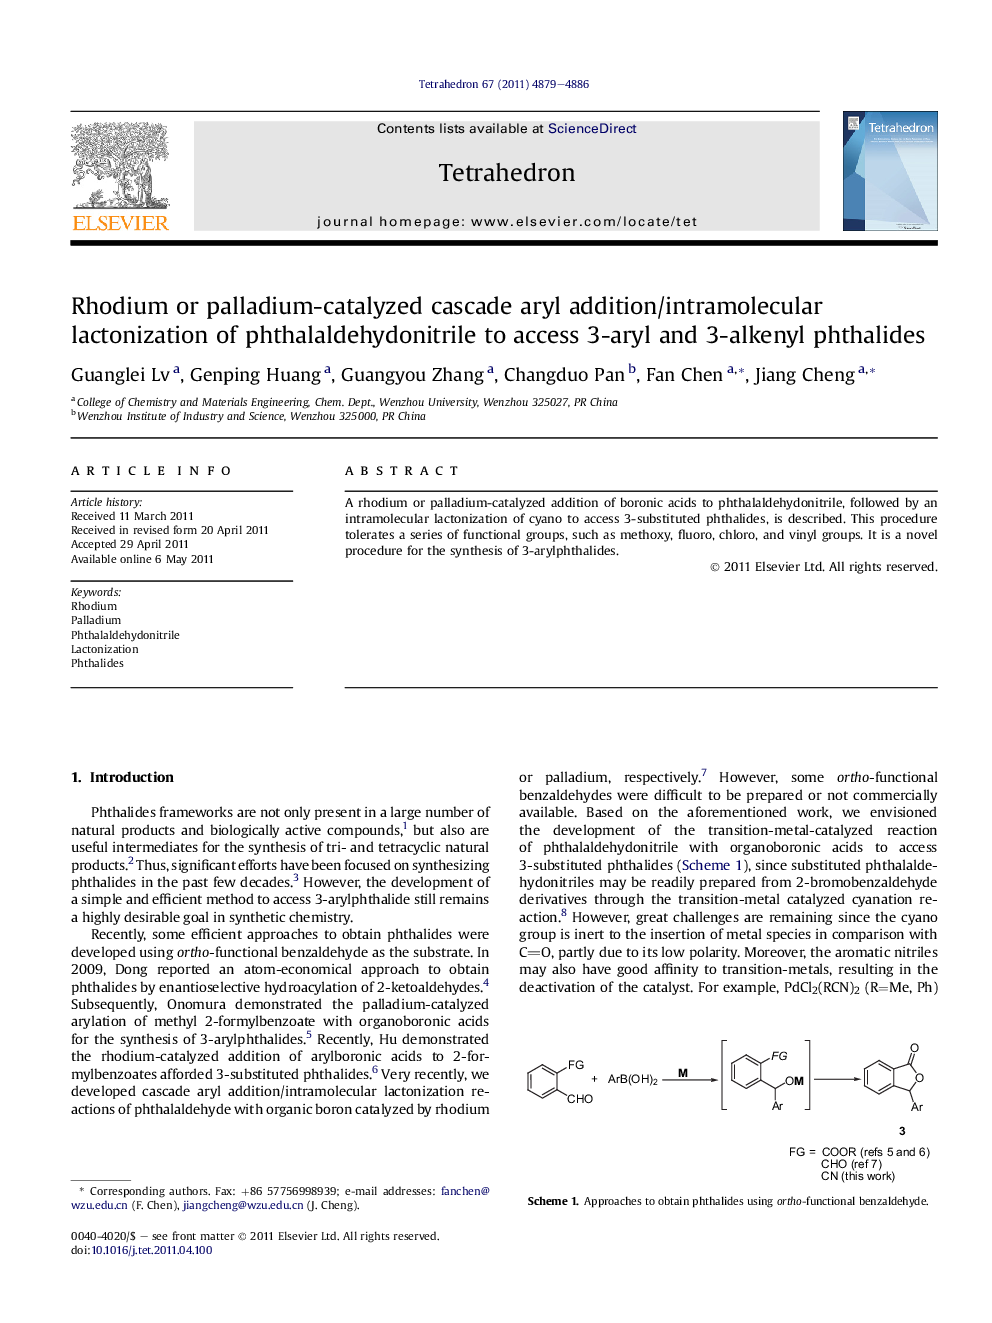 Rhodium or palladium-catalyzed cascade aryl addition/intramolecular lactonization of phthalaldehydonitrile to access 3-aryl and 3-alkenyl phthalides